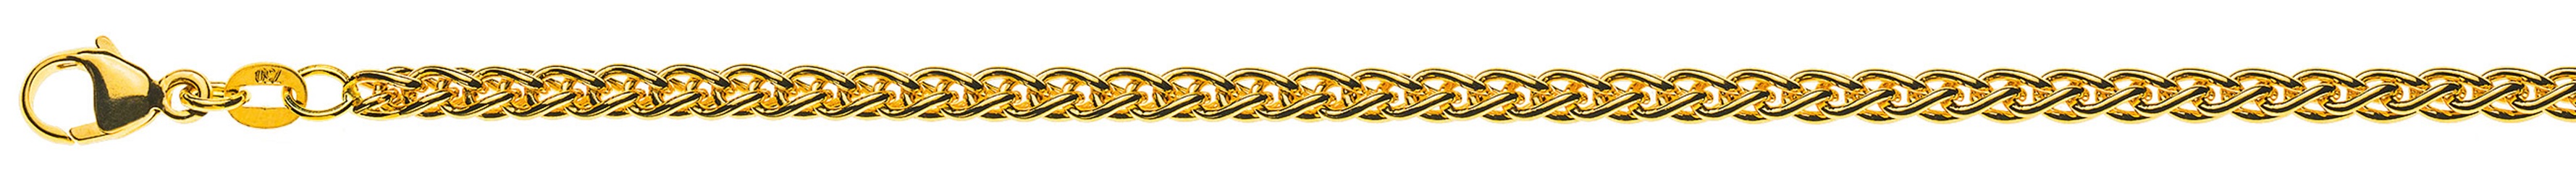 AURONOS Prestige Necklace yellow gold 18K cable chain 60cm 3.3mm